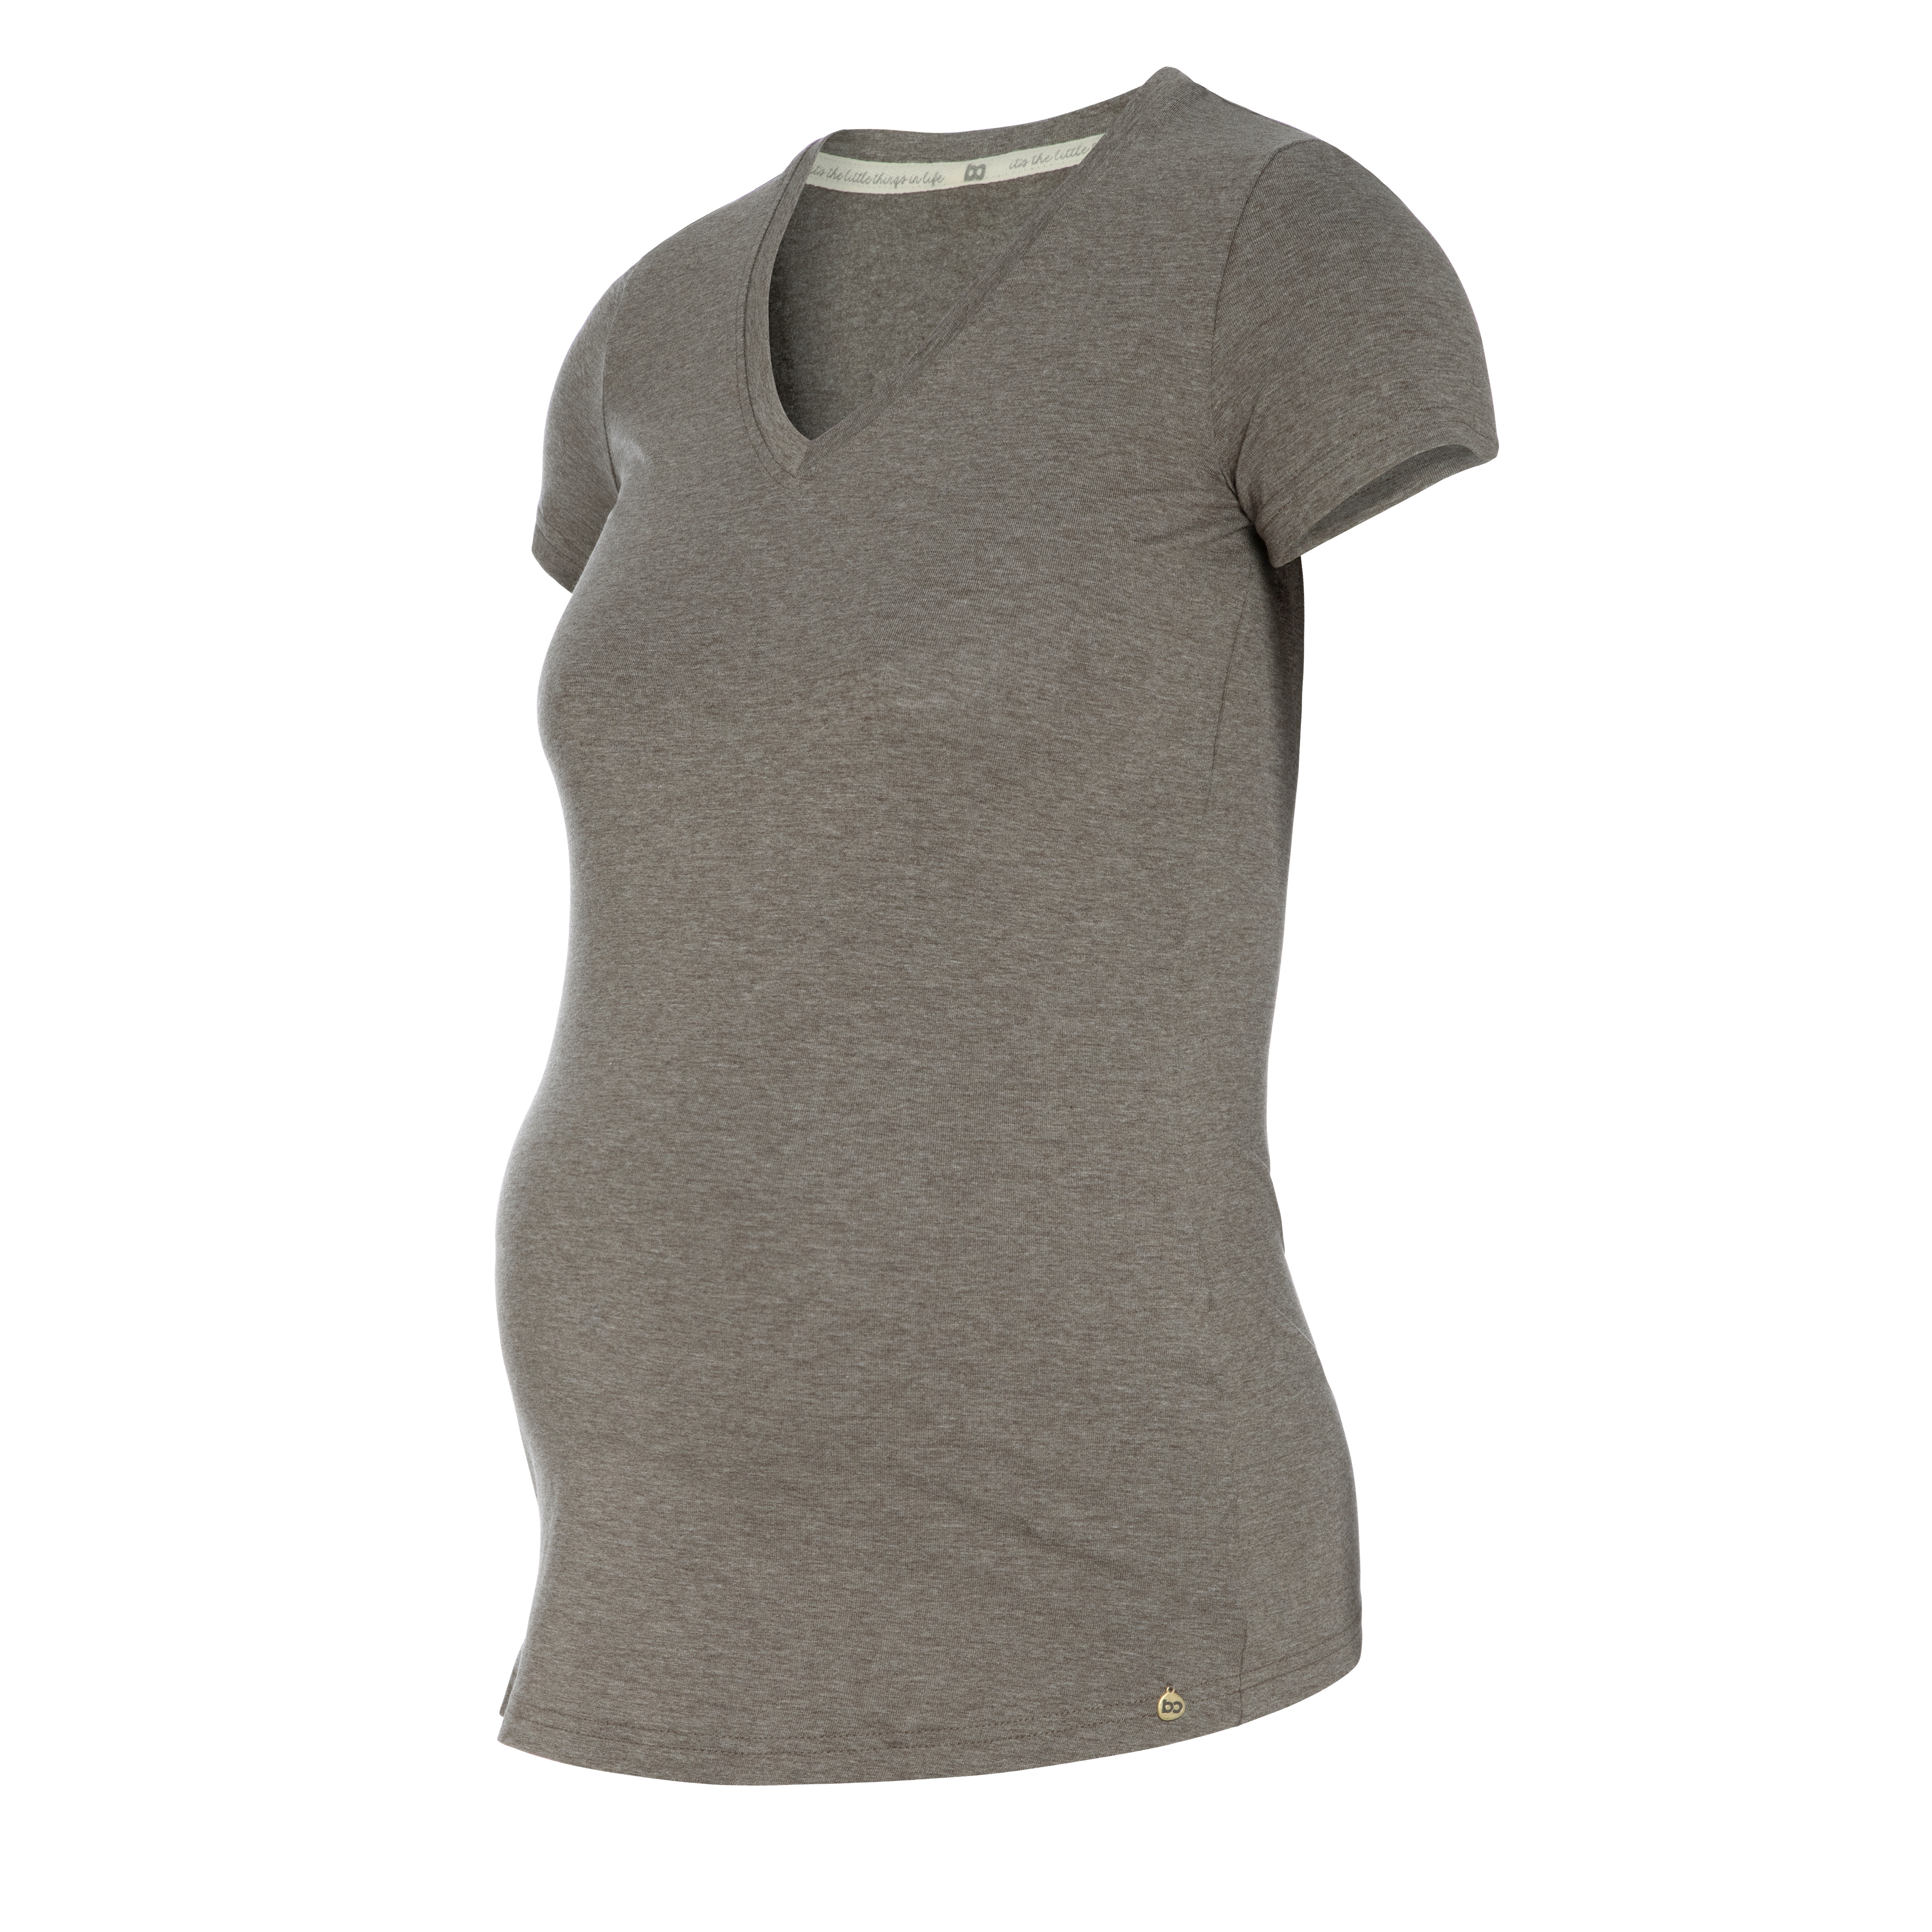 Maternity T-shirt Glow hazel brown - XL